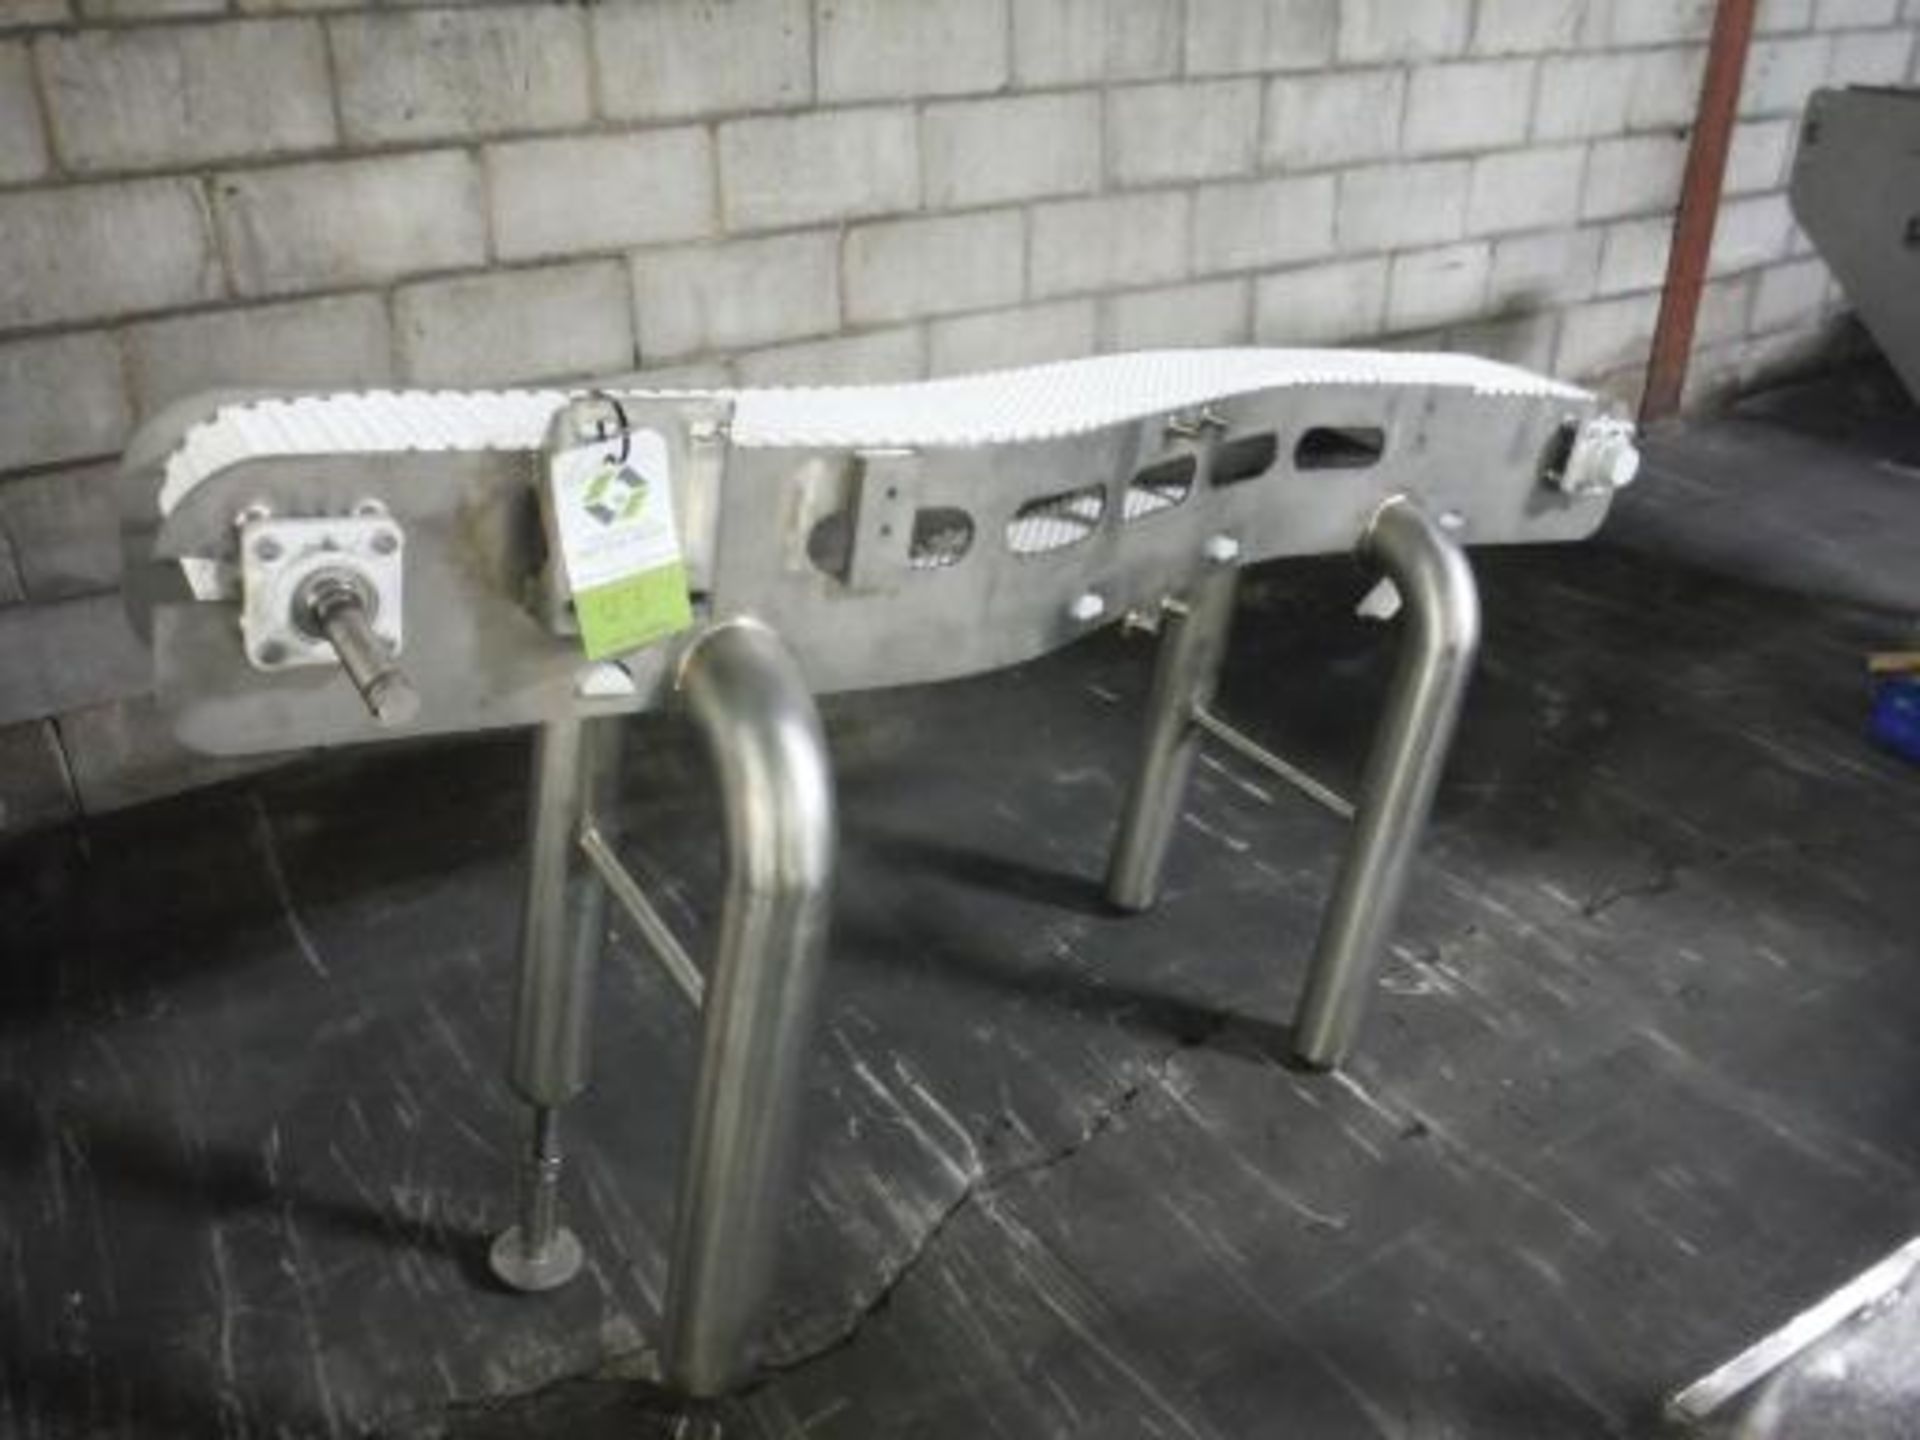 Powered S Conveyor, plastic interlock belt 68 in. long x 6 in. wide x 38 in. tall, SS frame, missing